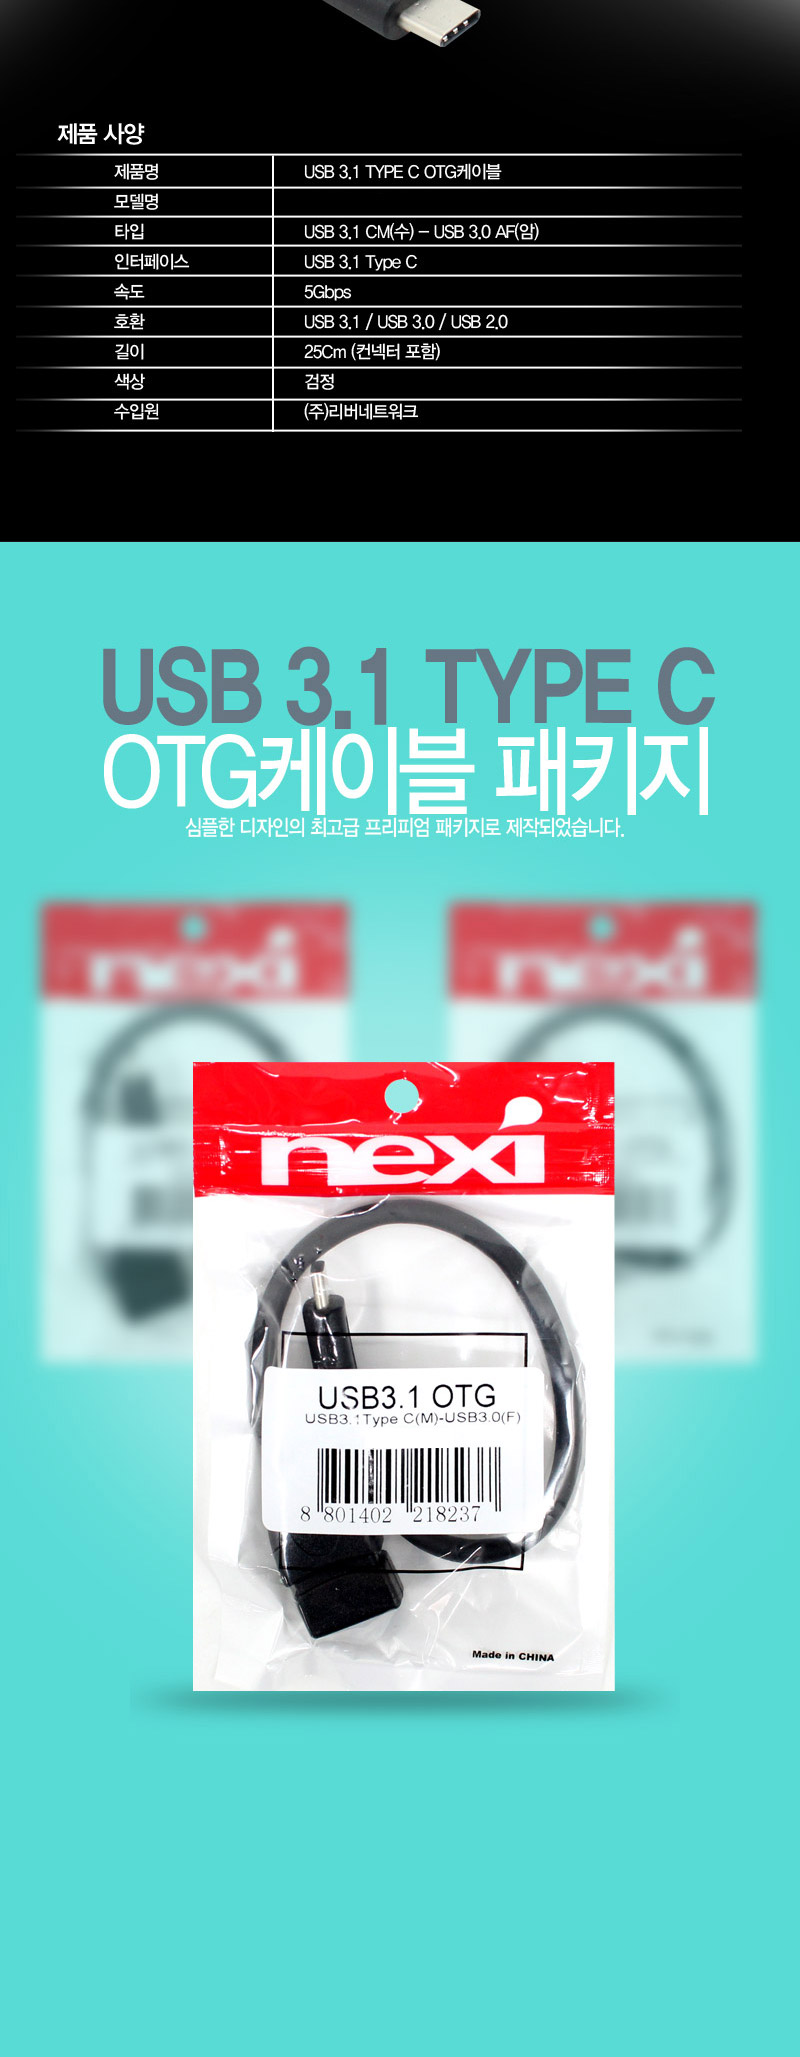 NX-USB31OTG_07.jpg